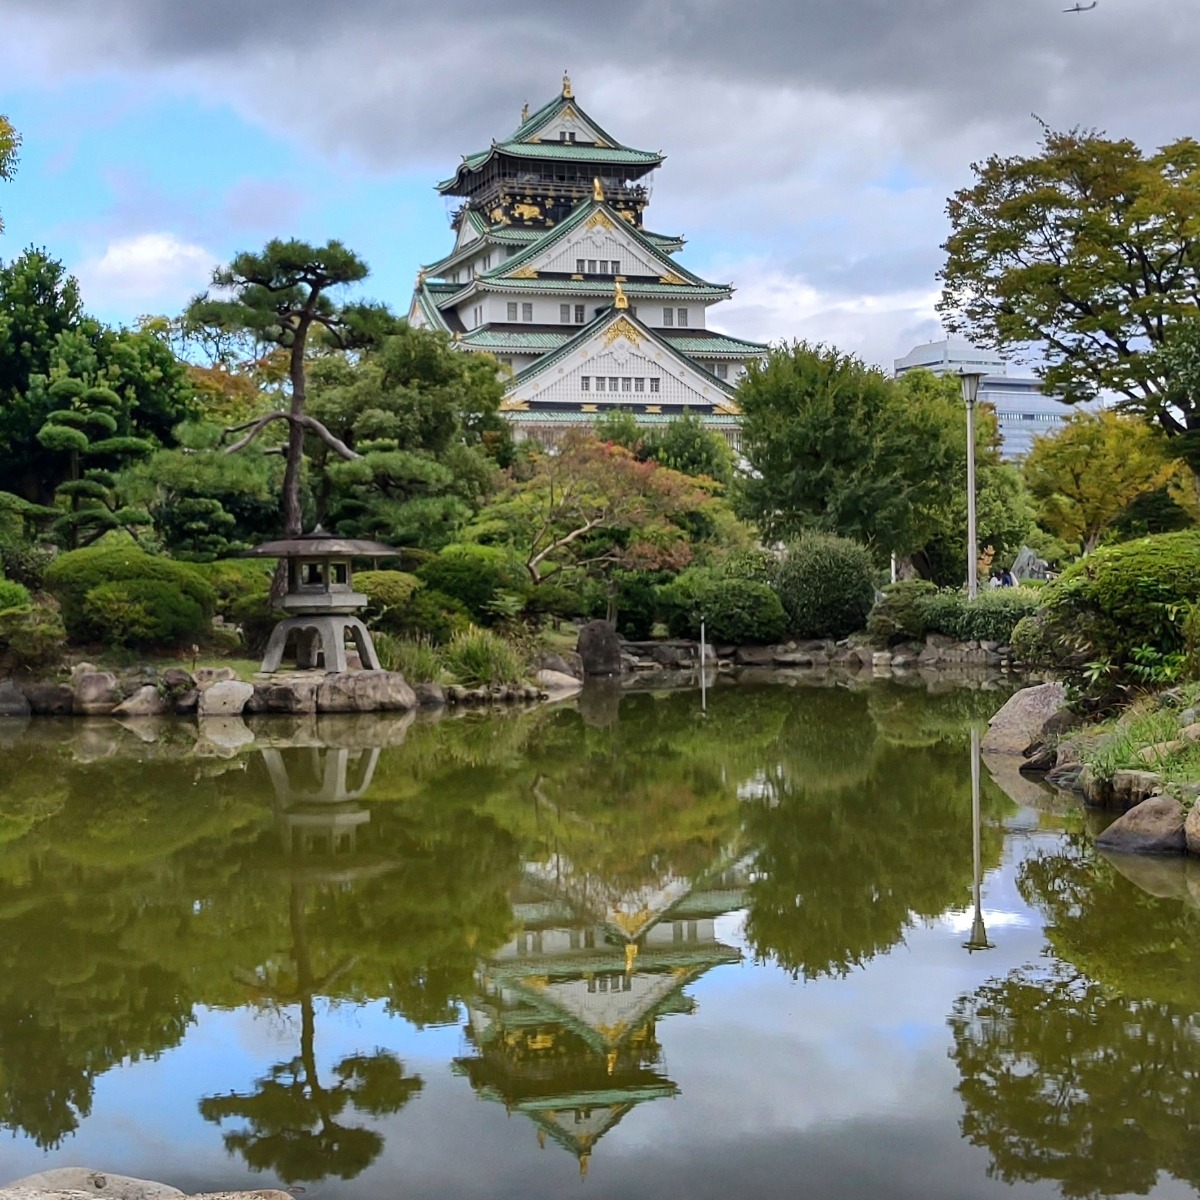 Japan is beautiful historic palace